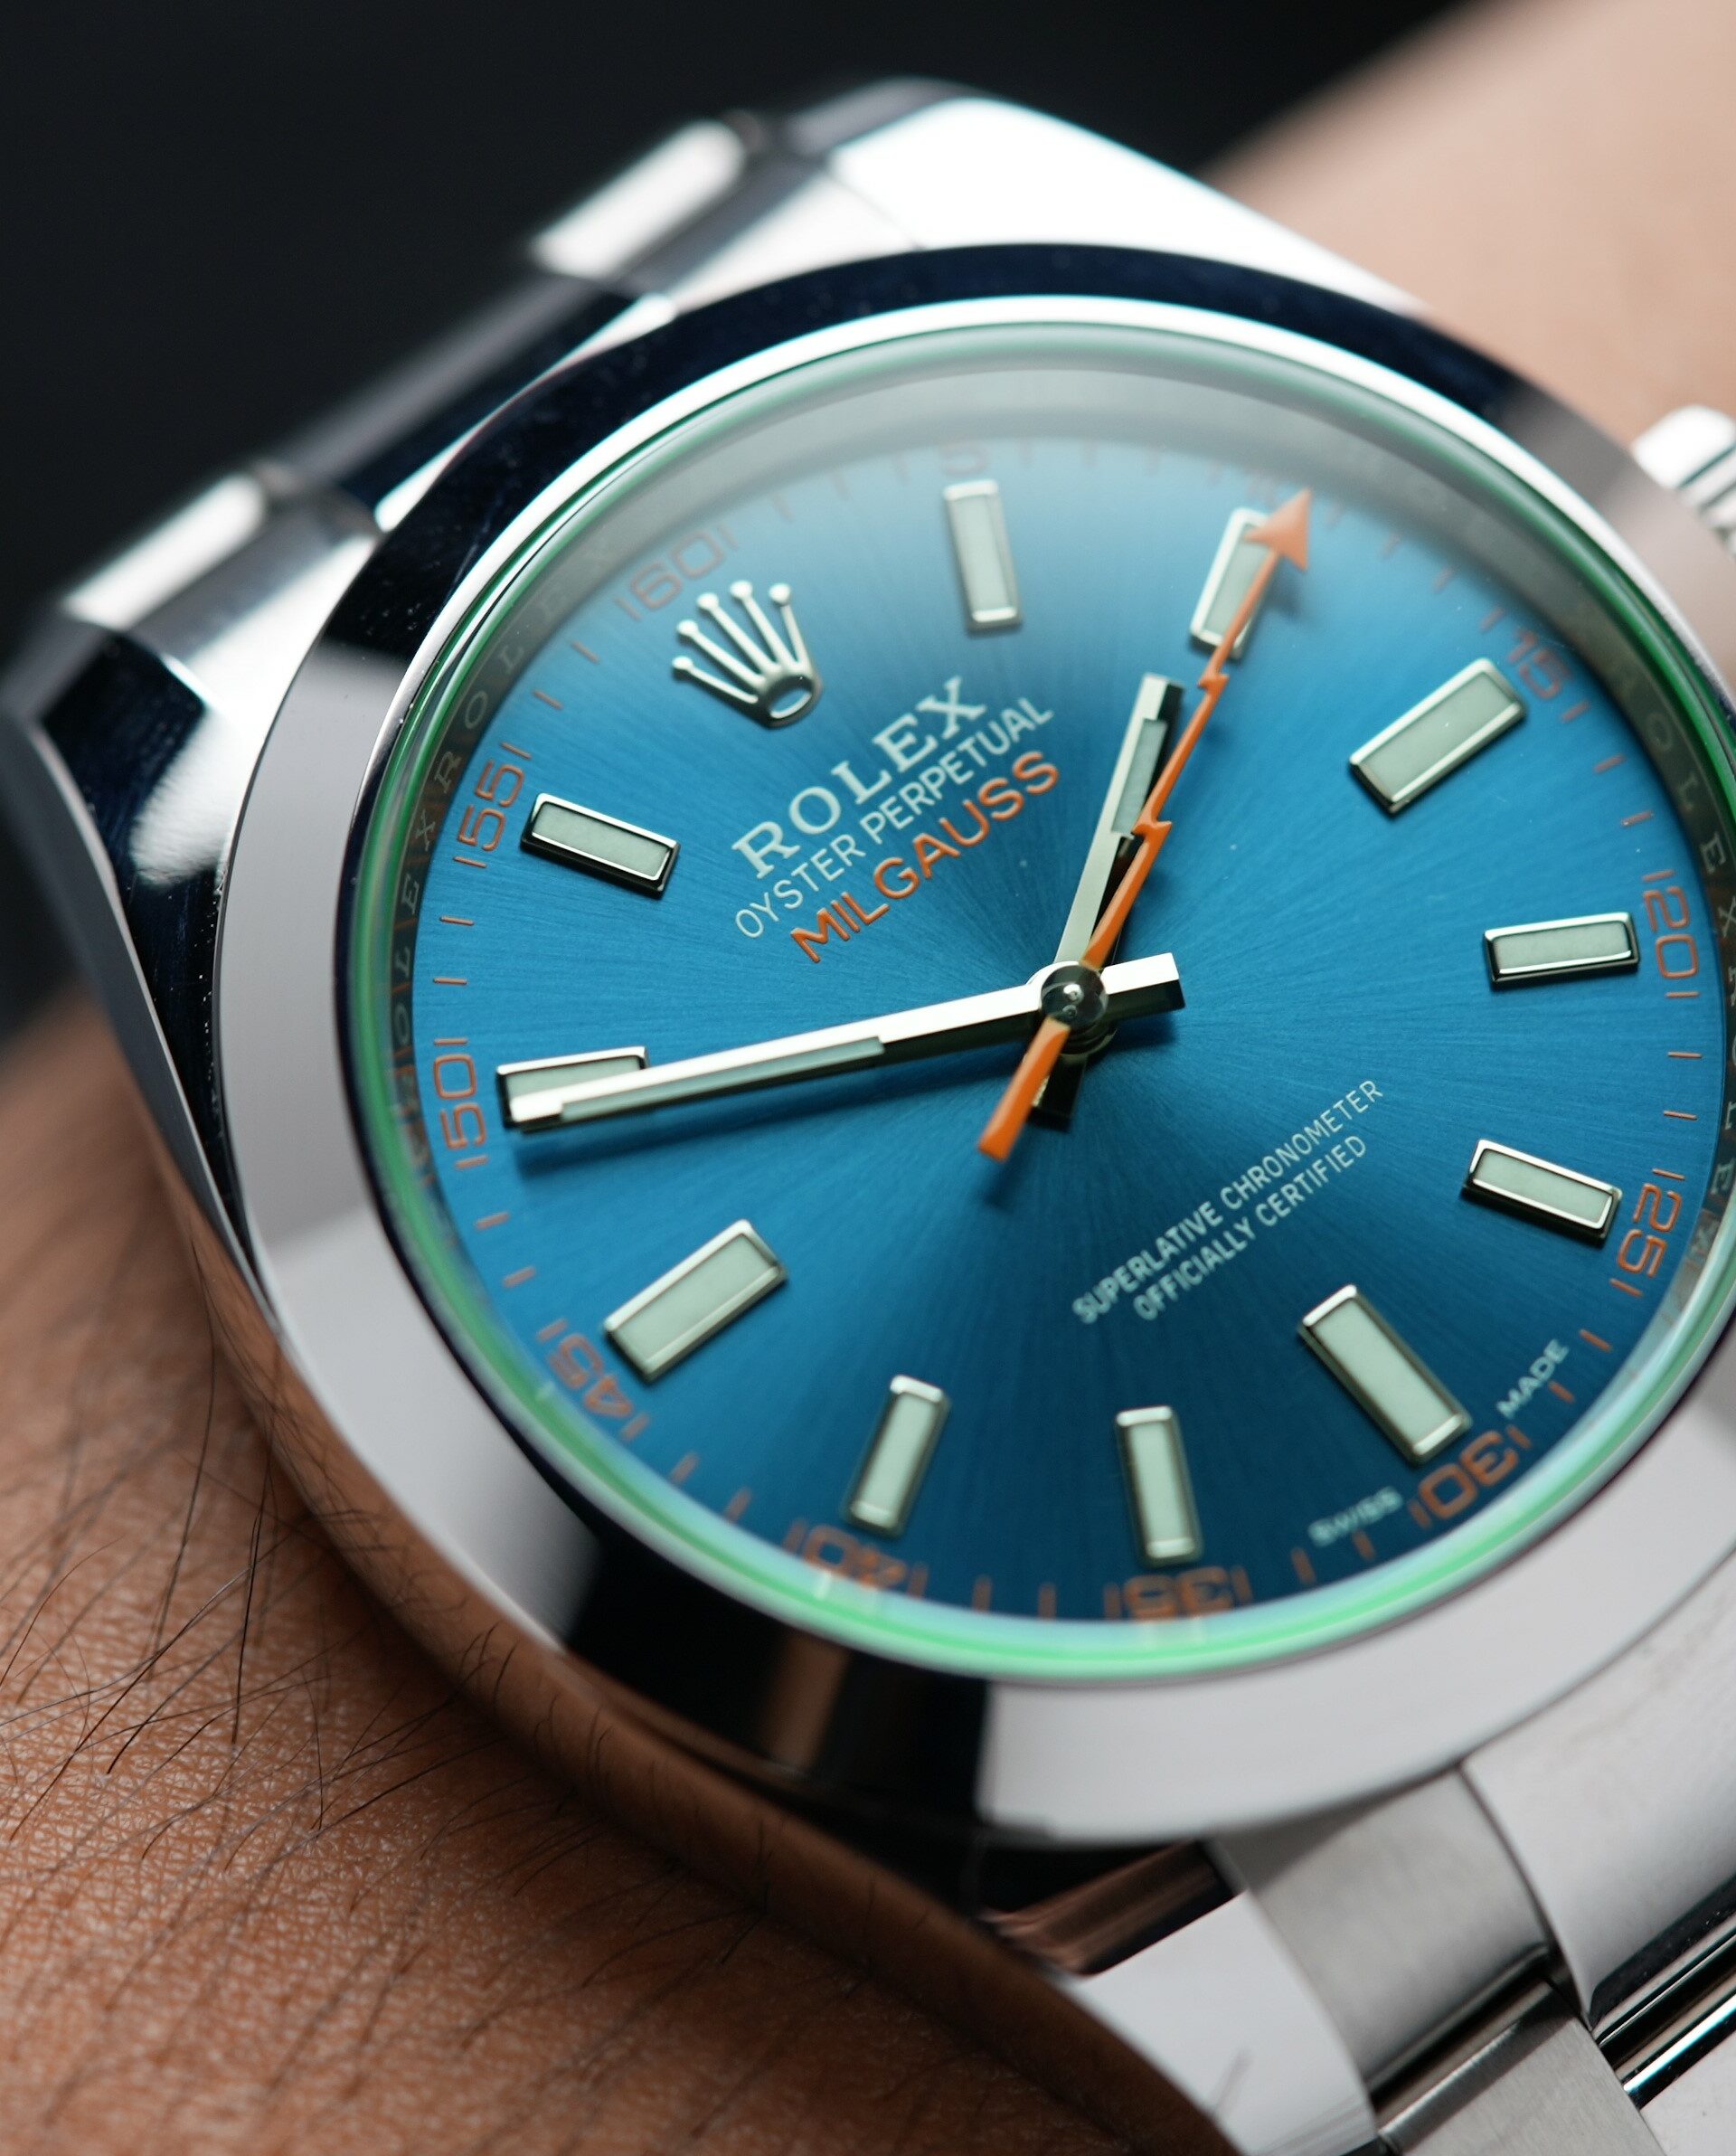 Rolex Milgauss Z Blue UNWORN 116400GV wristwatch displayed on the wrist.